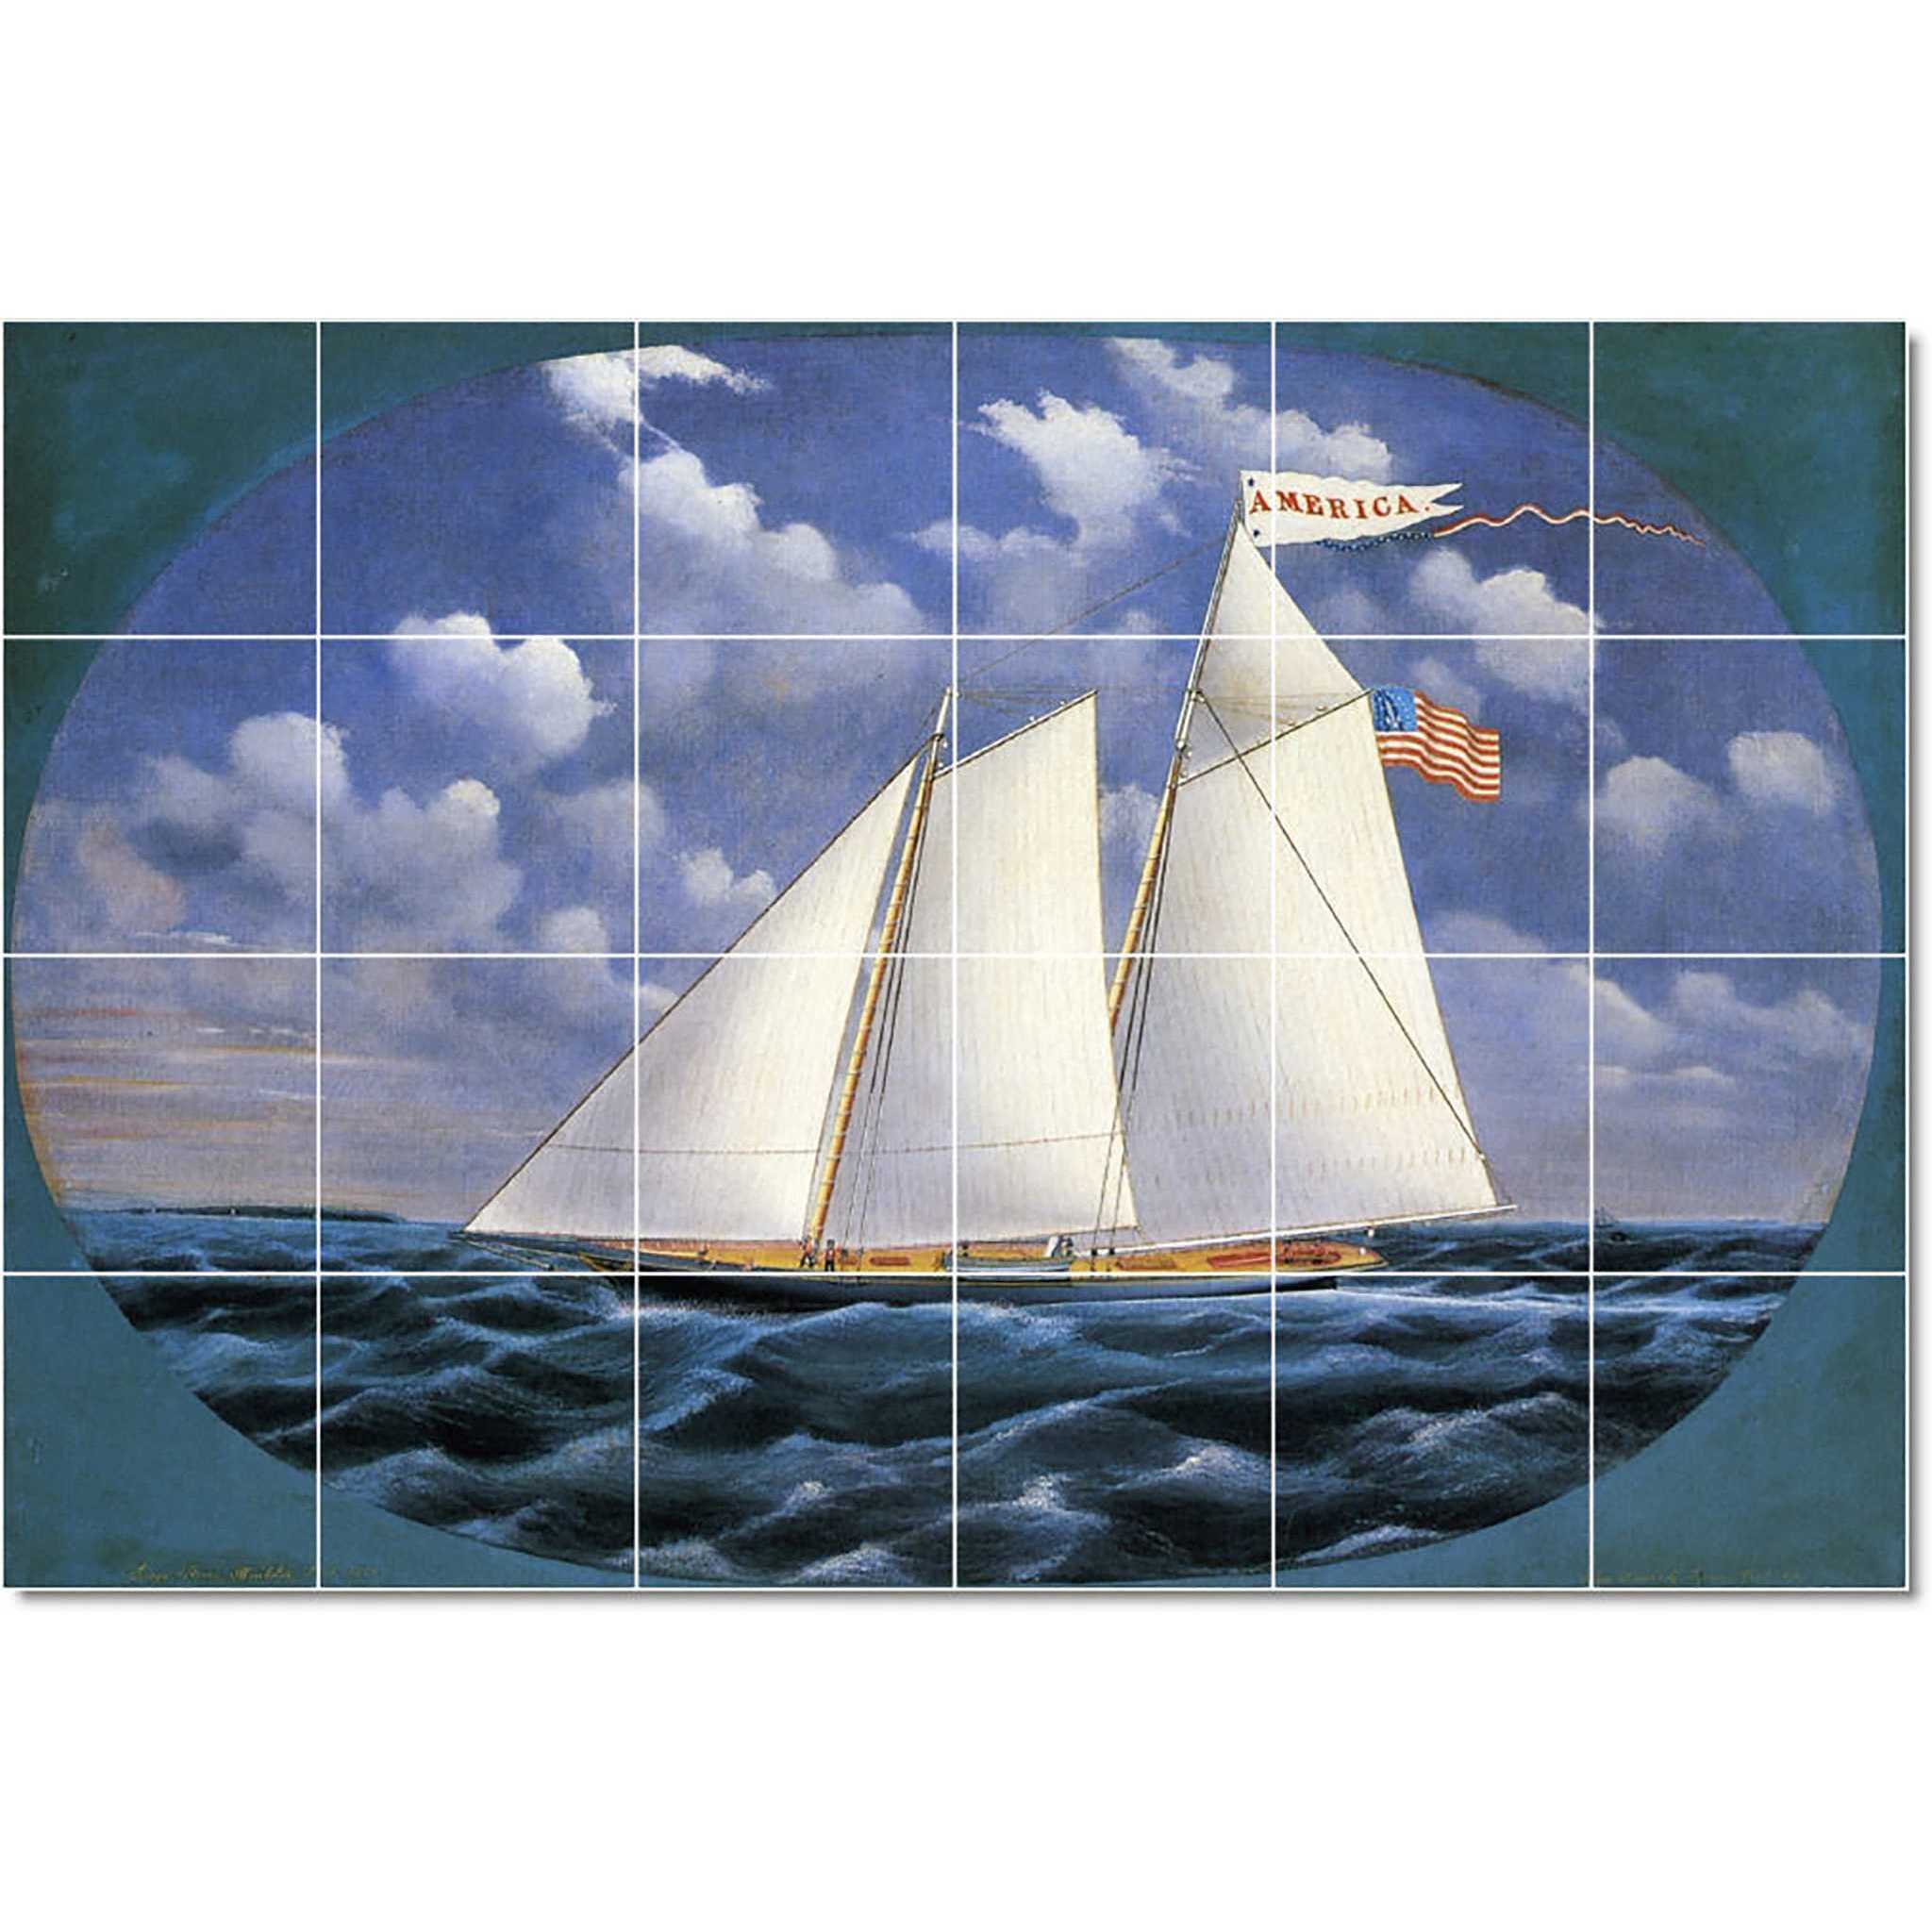 james bard boat ship painting ceramic tile mural p22043